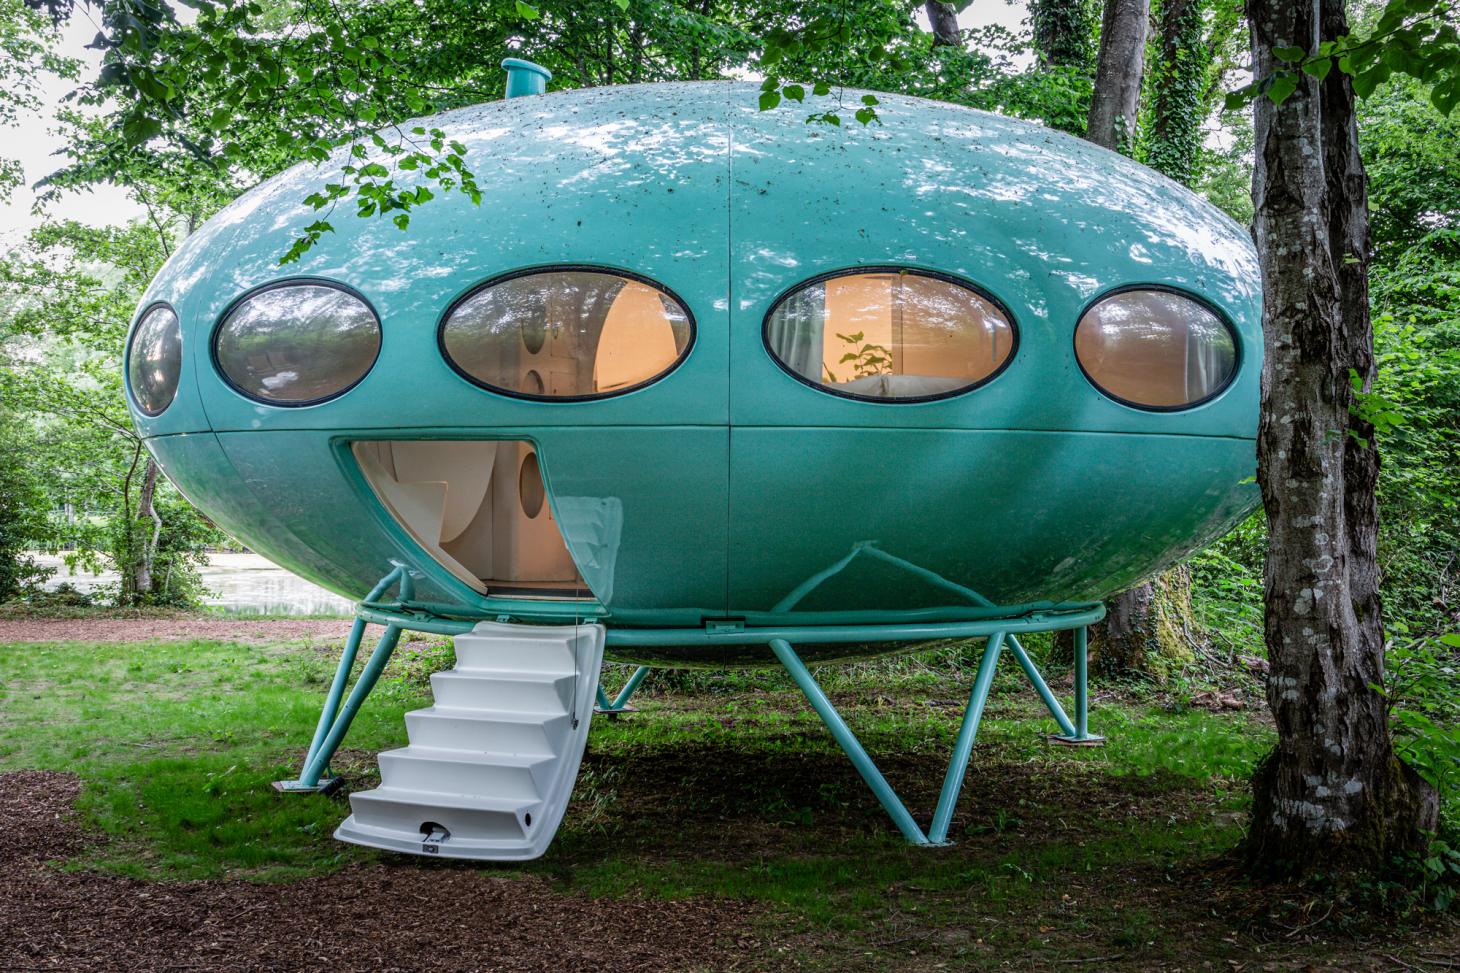 The futuristic, modernist cabin is open for visitors